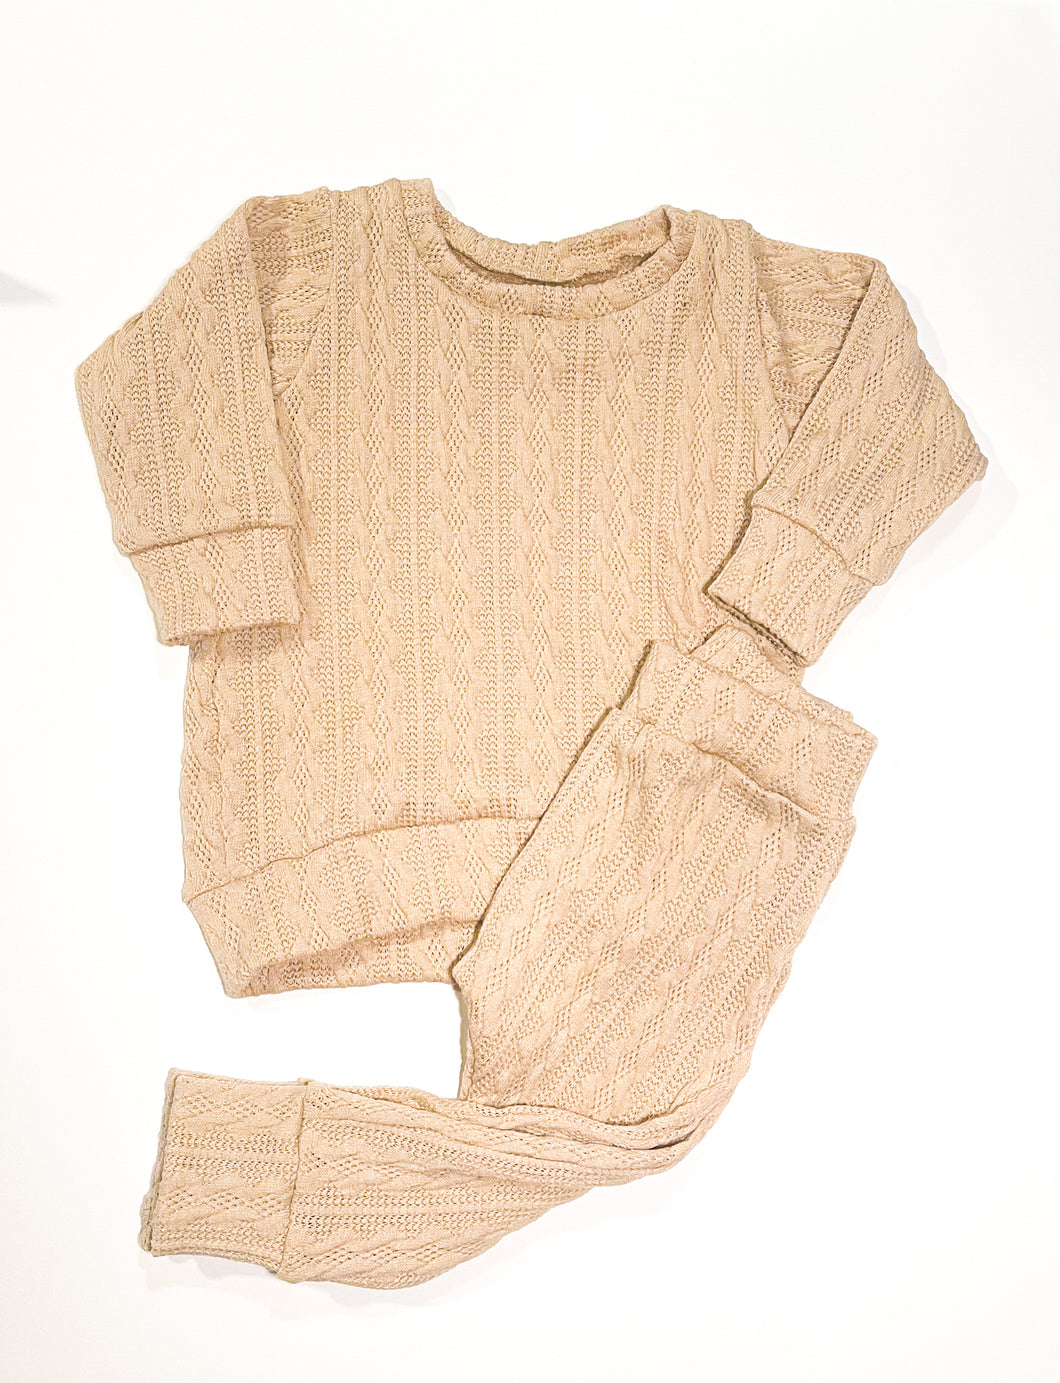 Tan Sweater Knit